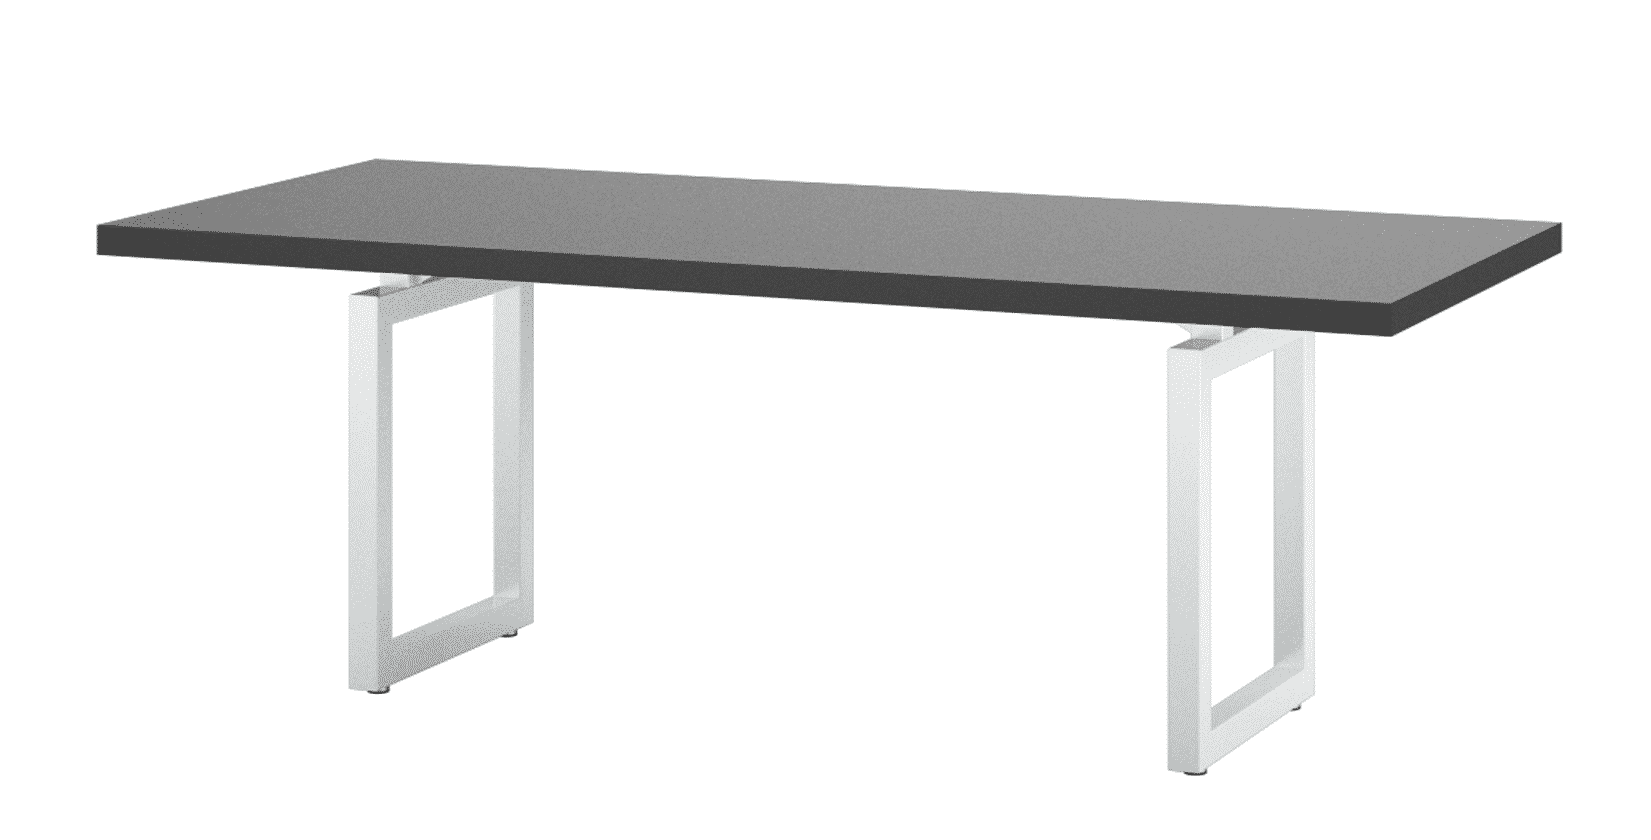 Coby Square Table / Desks & Conference Tables | Hi5 Furniture, Inc.